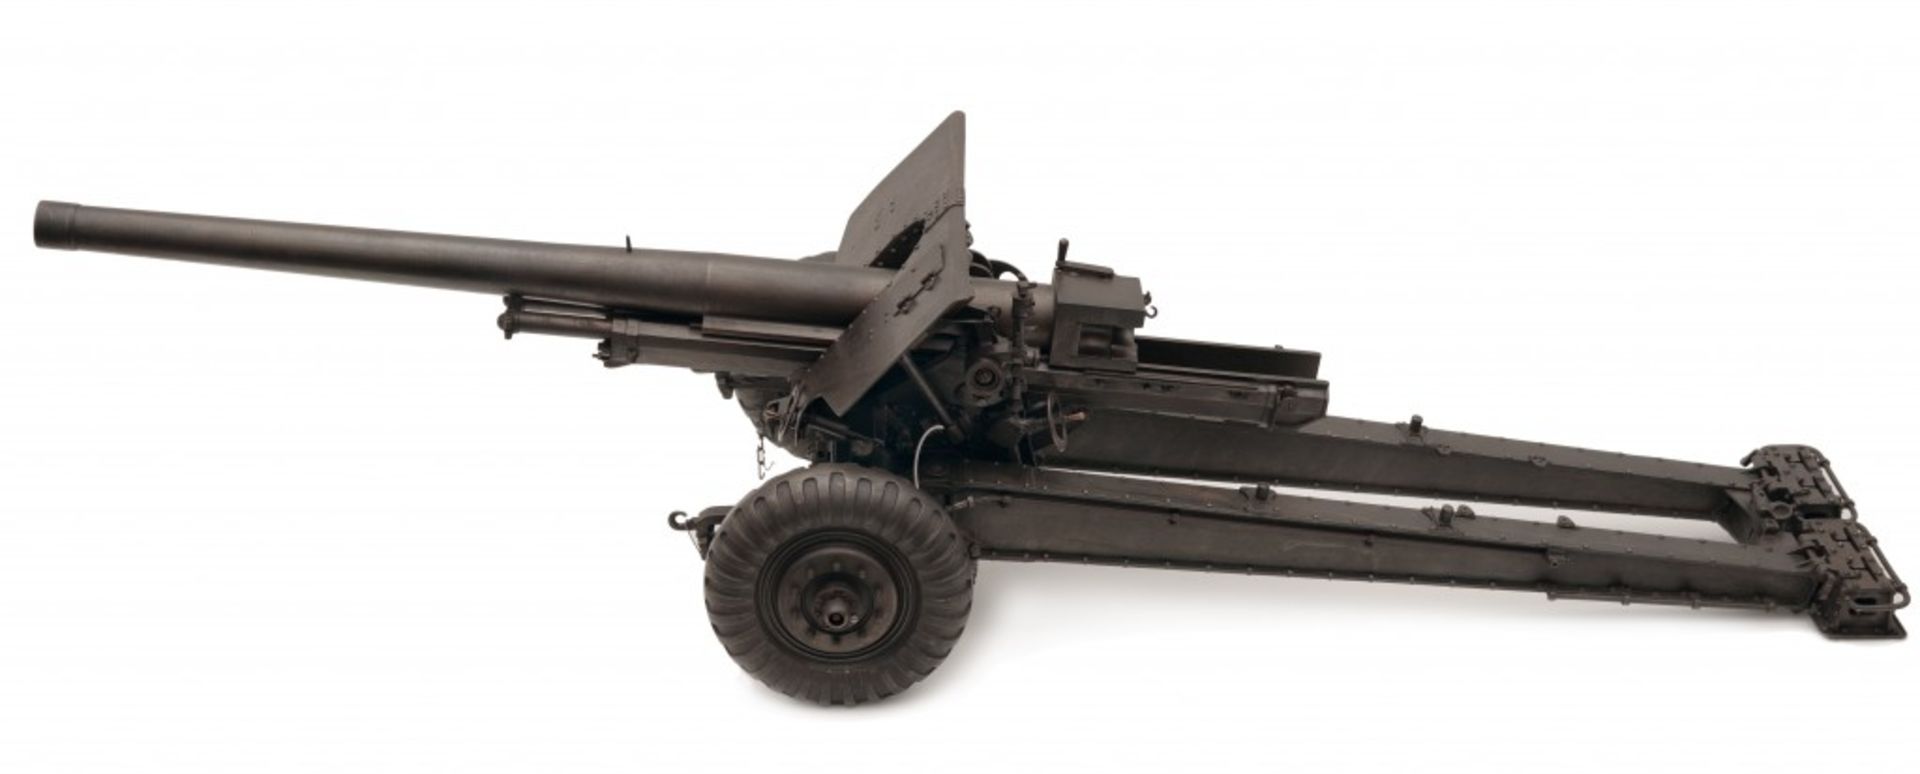 A Bronze Model Cannon M 35 Skoda, cal. 105 mm